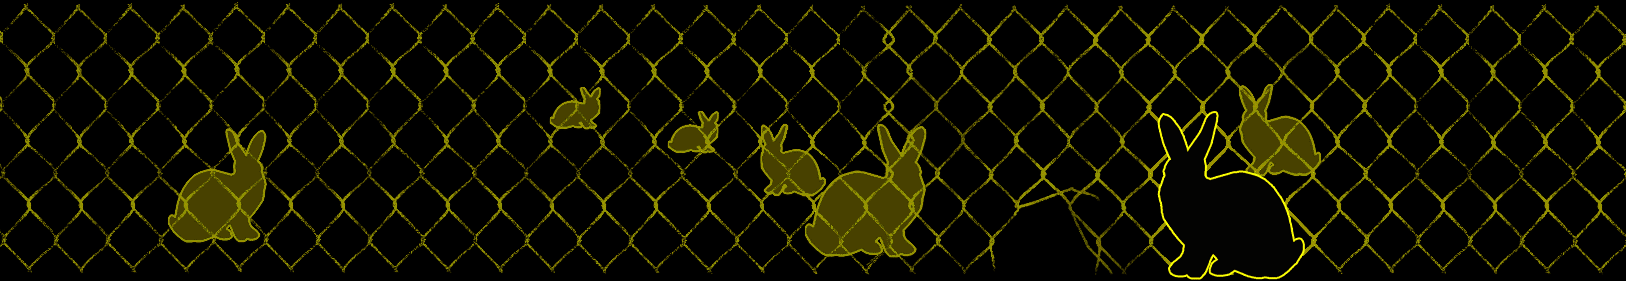 tplimg:blackrabbit:rabbitprooffence_by_08.gif